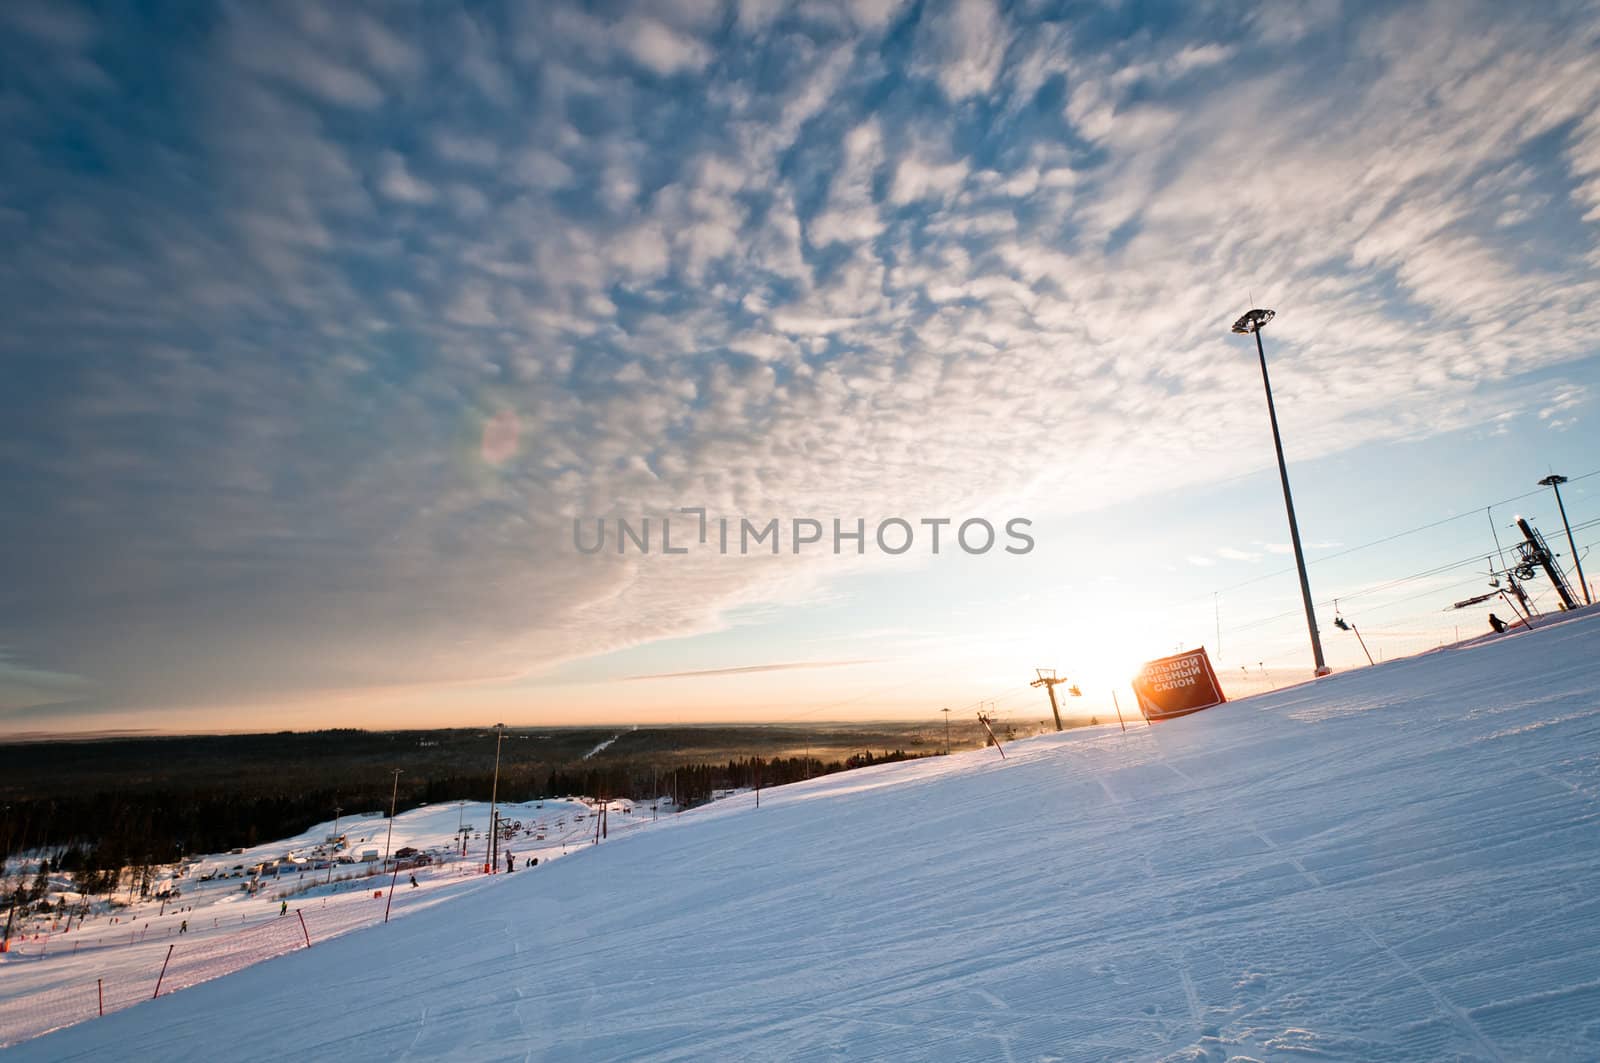 Ski resort big training slope at sunrise with tracks and trails